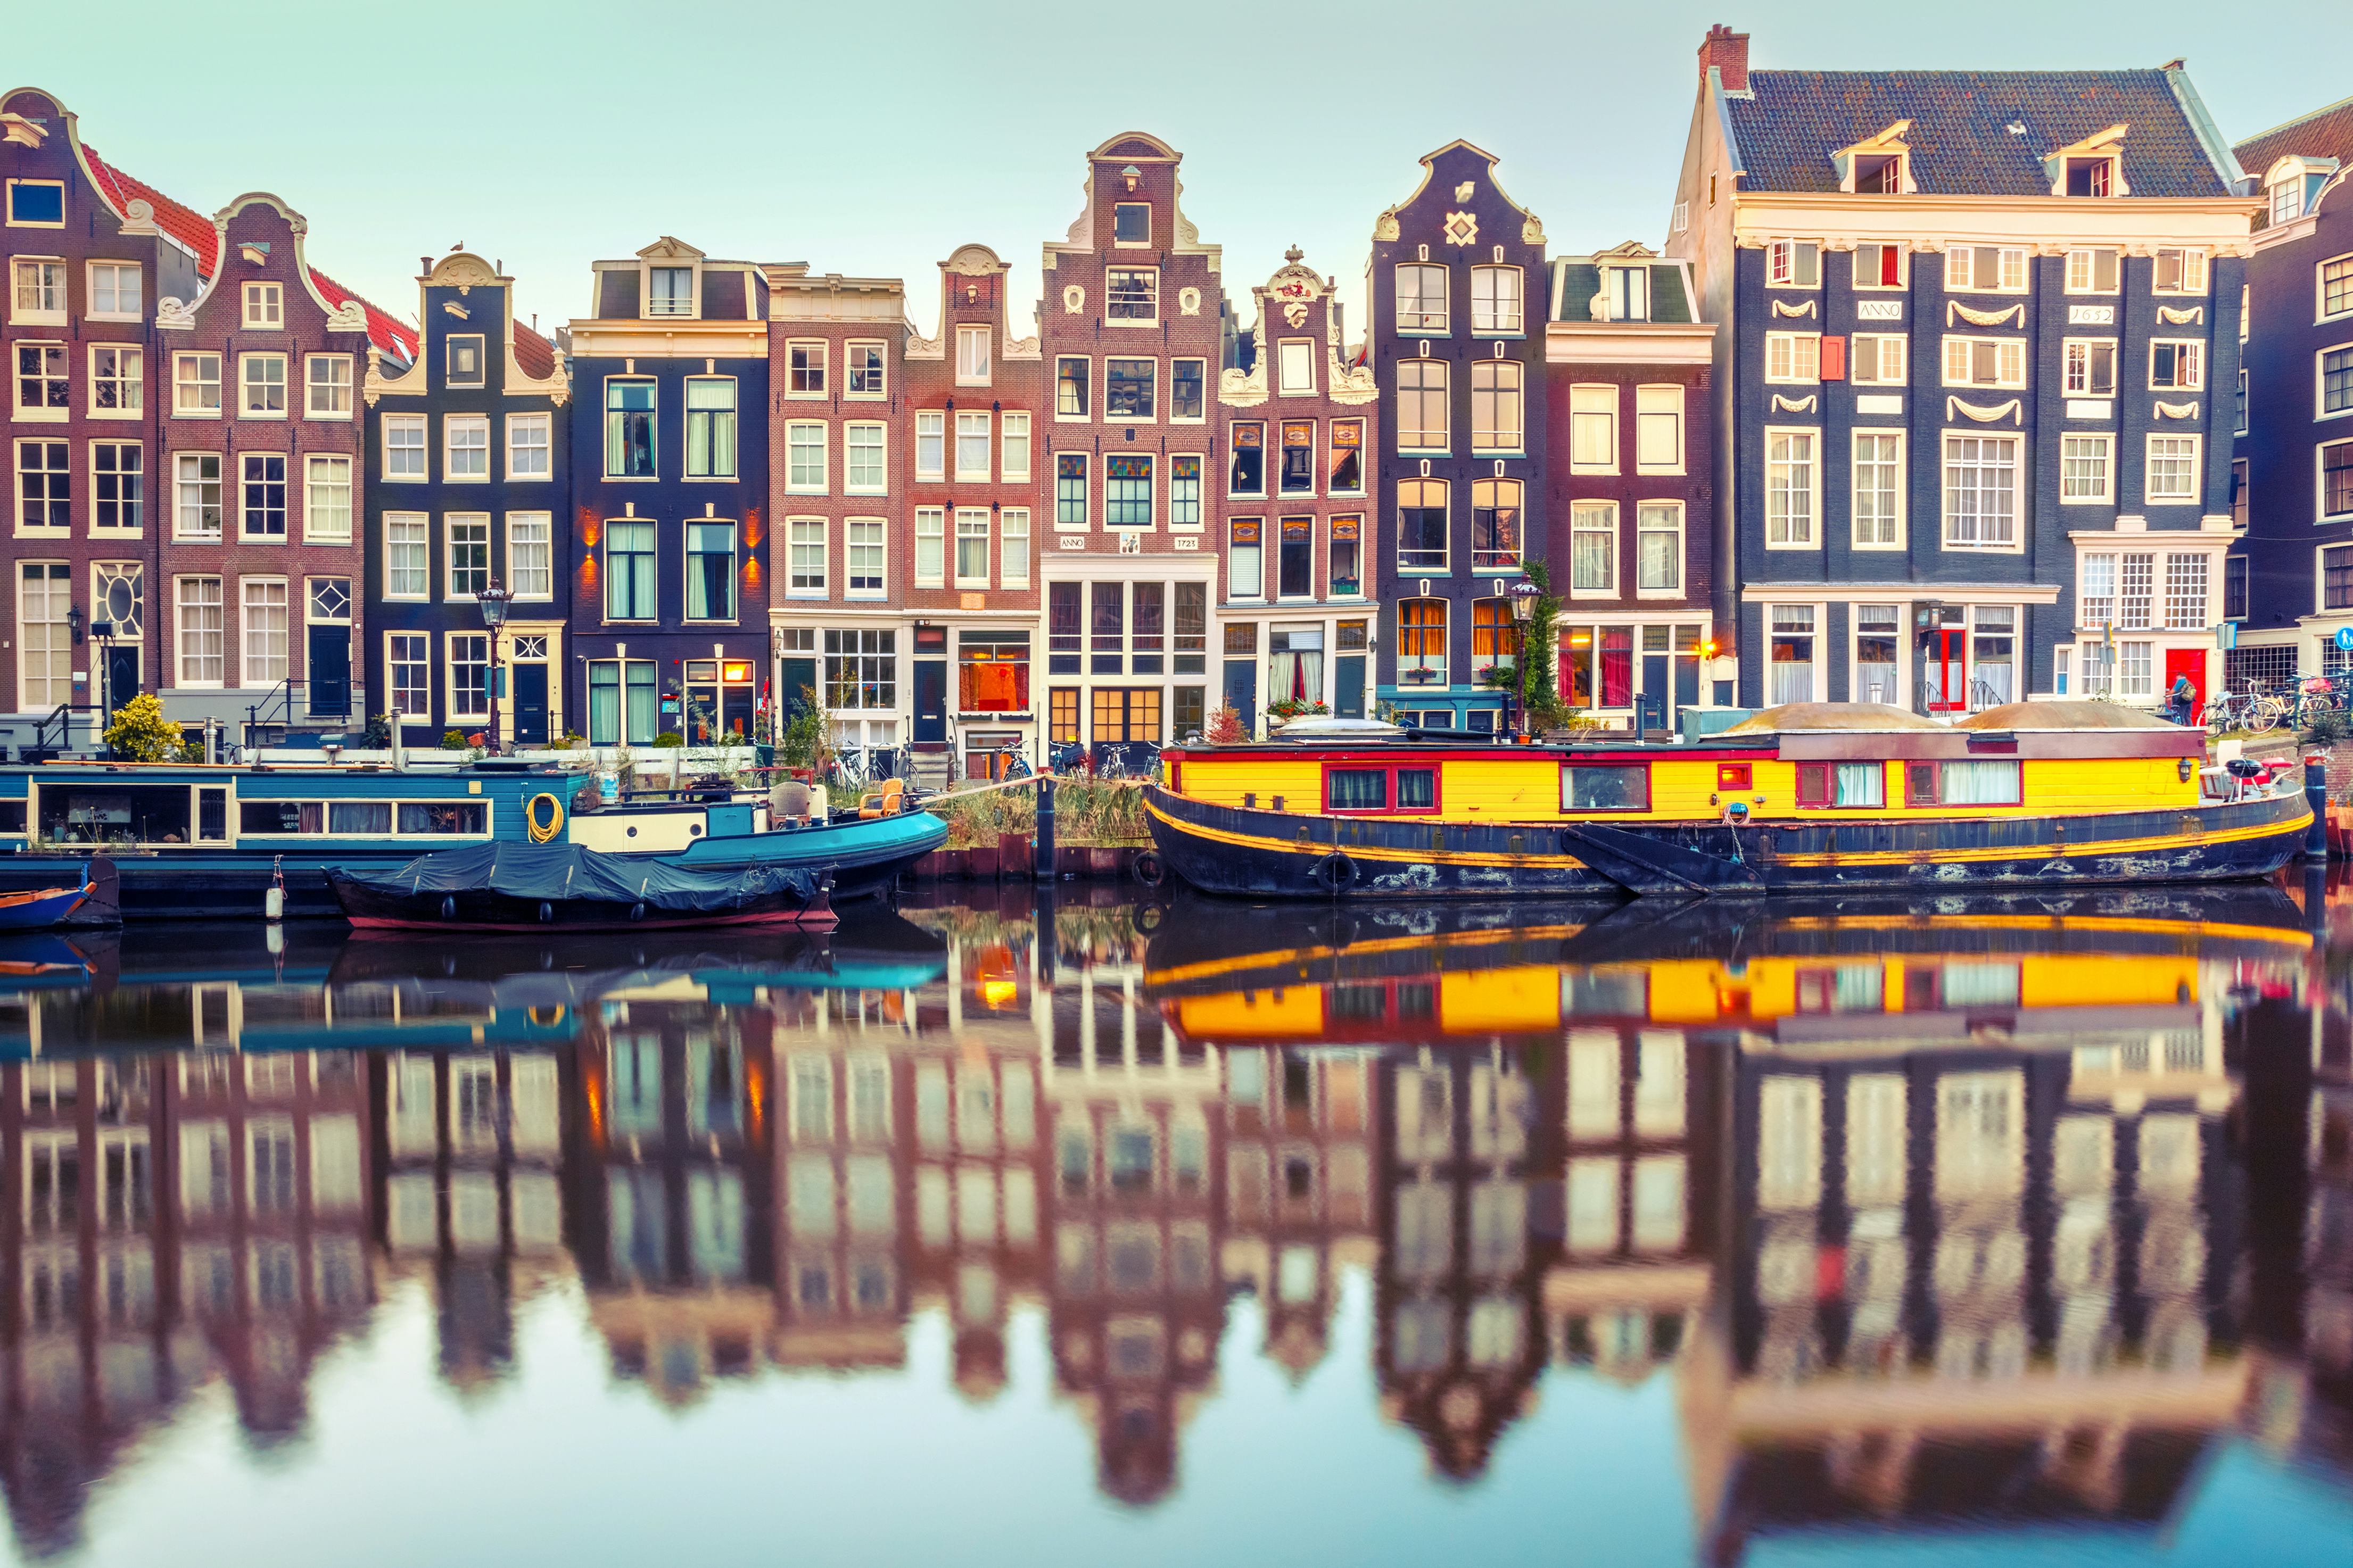 Huurwoning in Amsterdam 'geen goed beleggingsproduct'